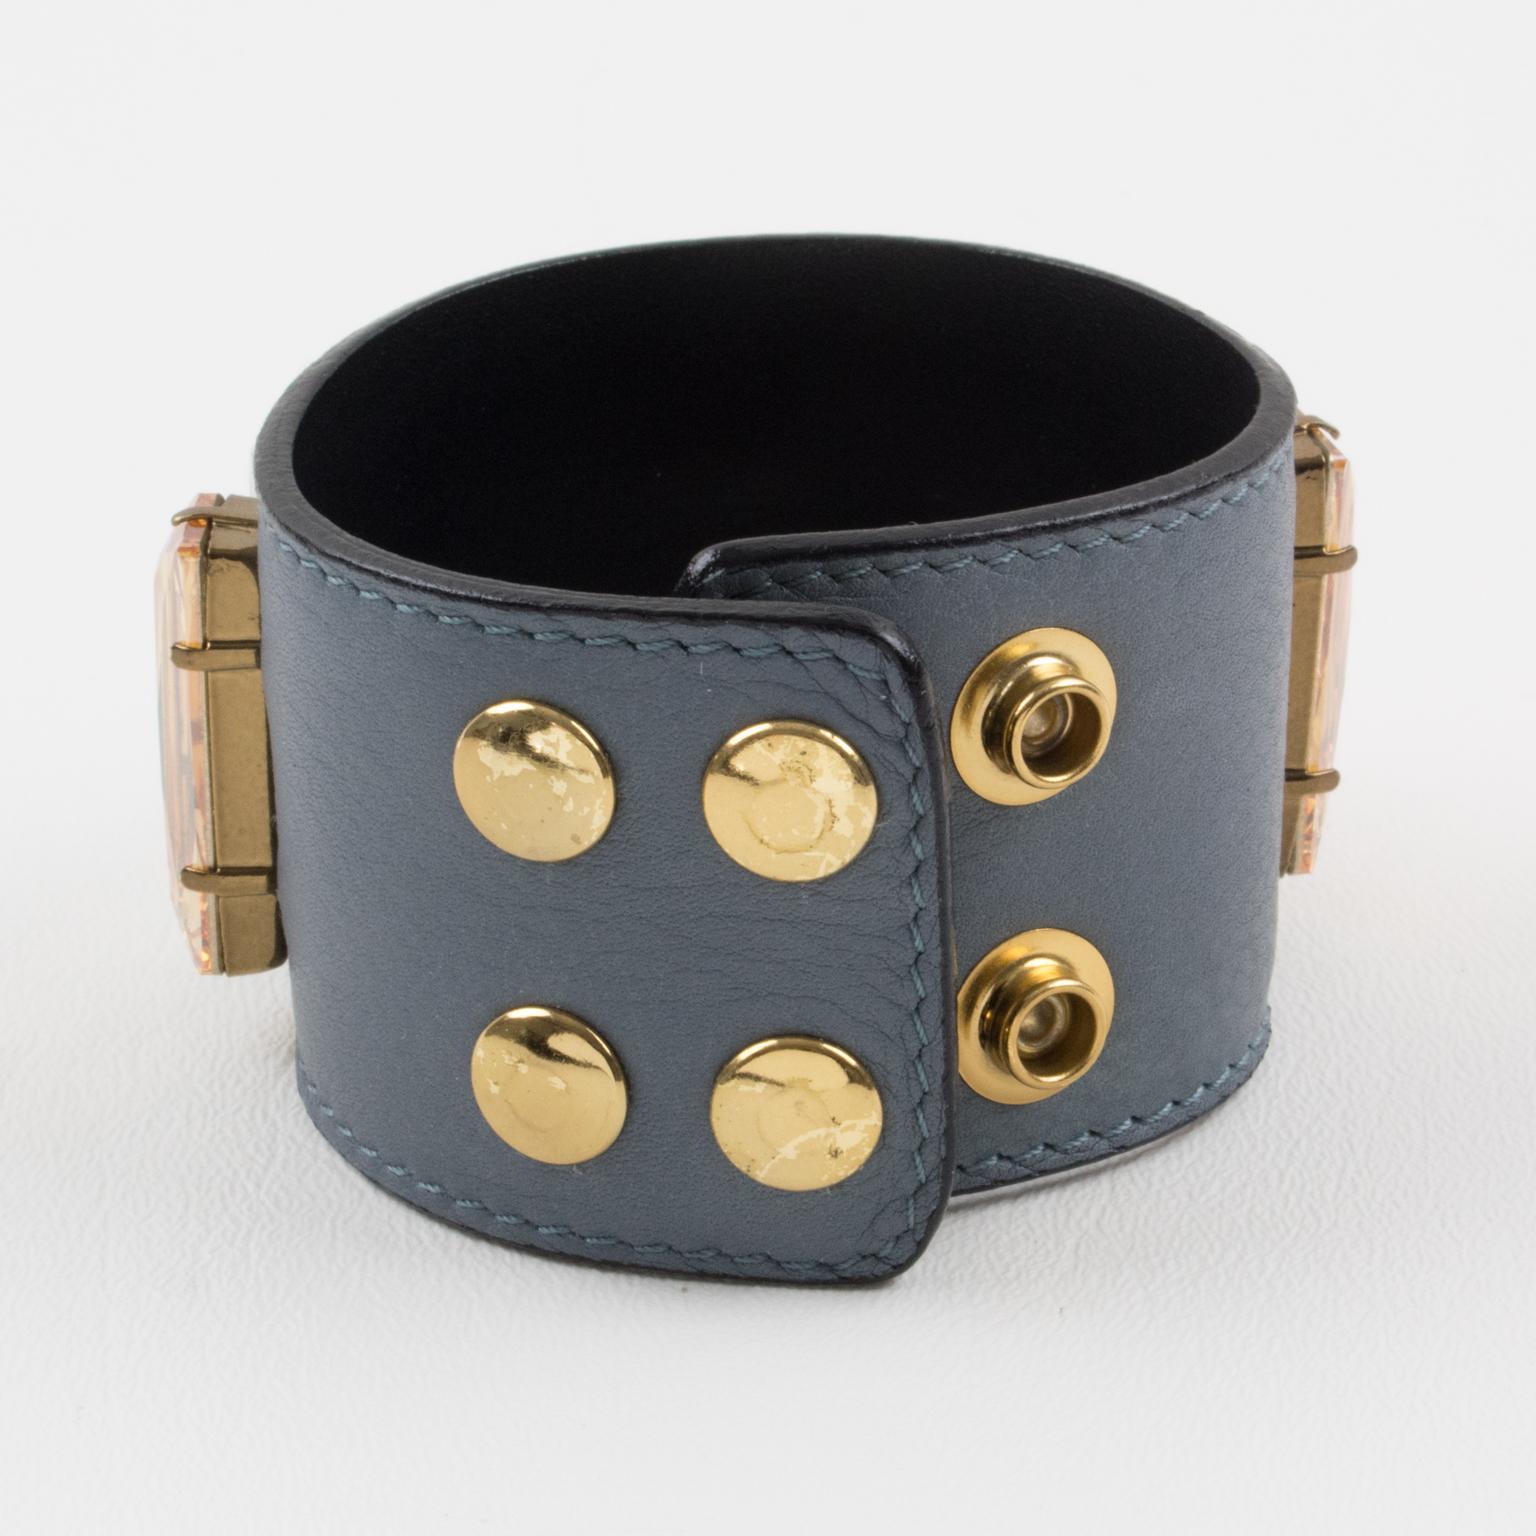 Sonia Rykiel Paris Pastel Jeweled and Gray Leather Belt Bracelet For Sale 1